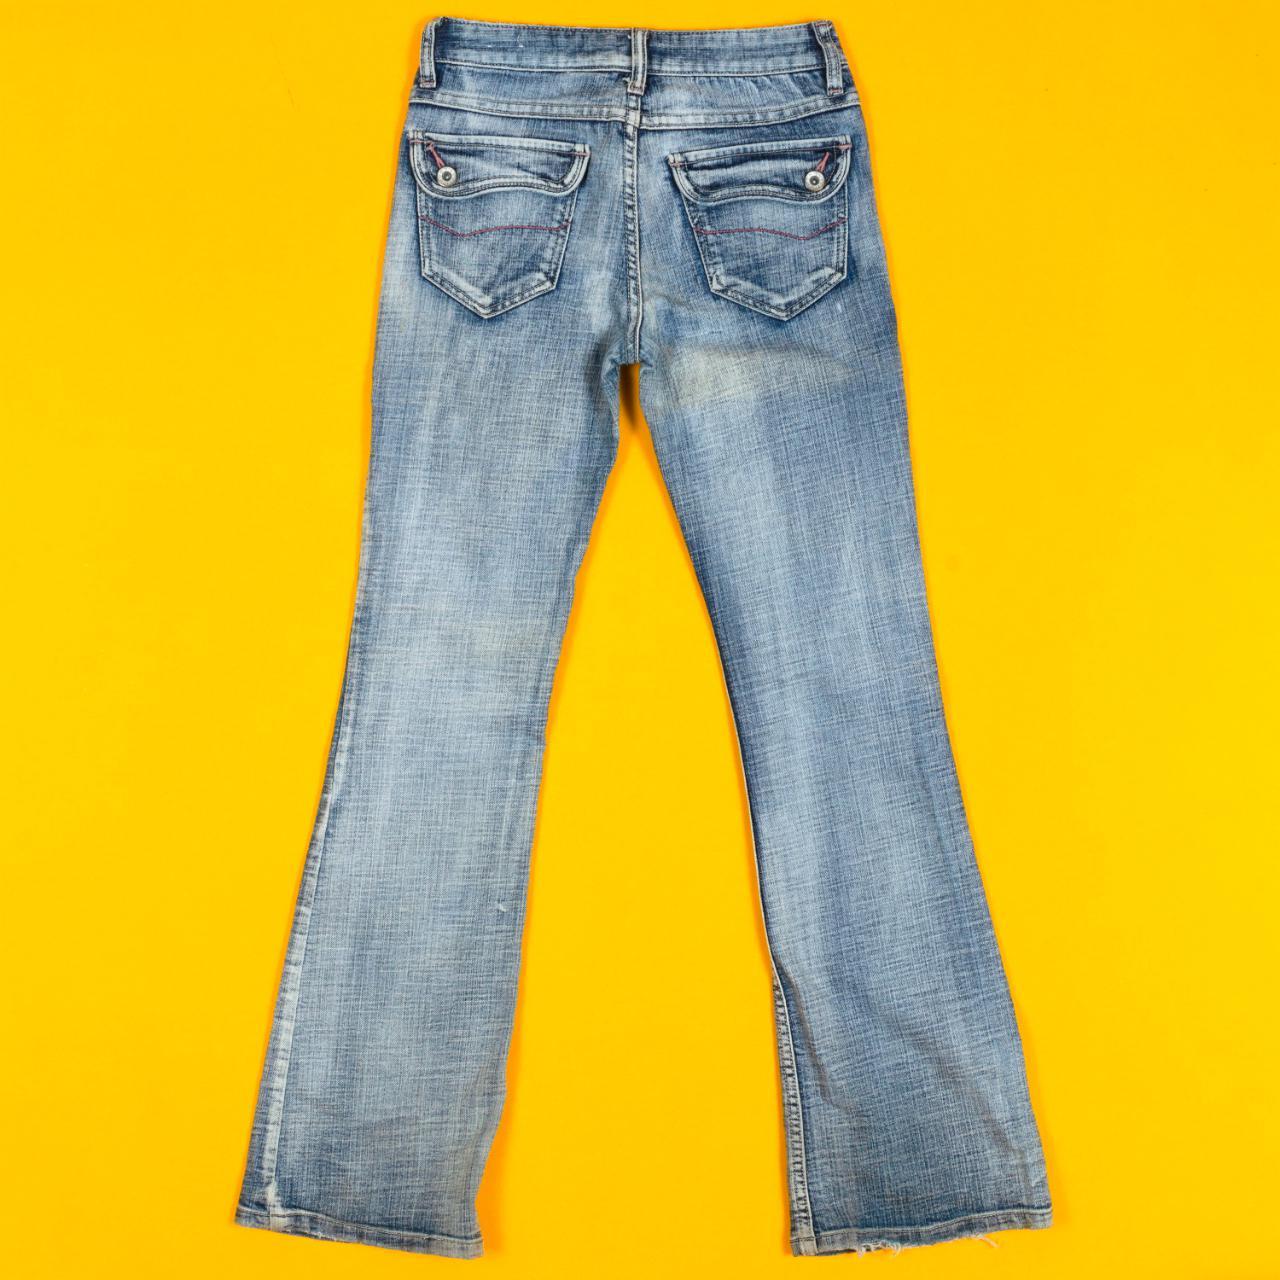 2000s low rise denim pants by Mudd. Light blue jean... - Depop